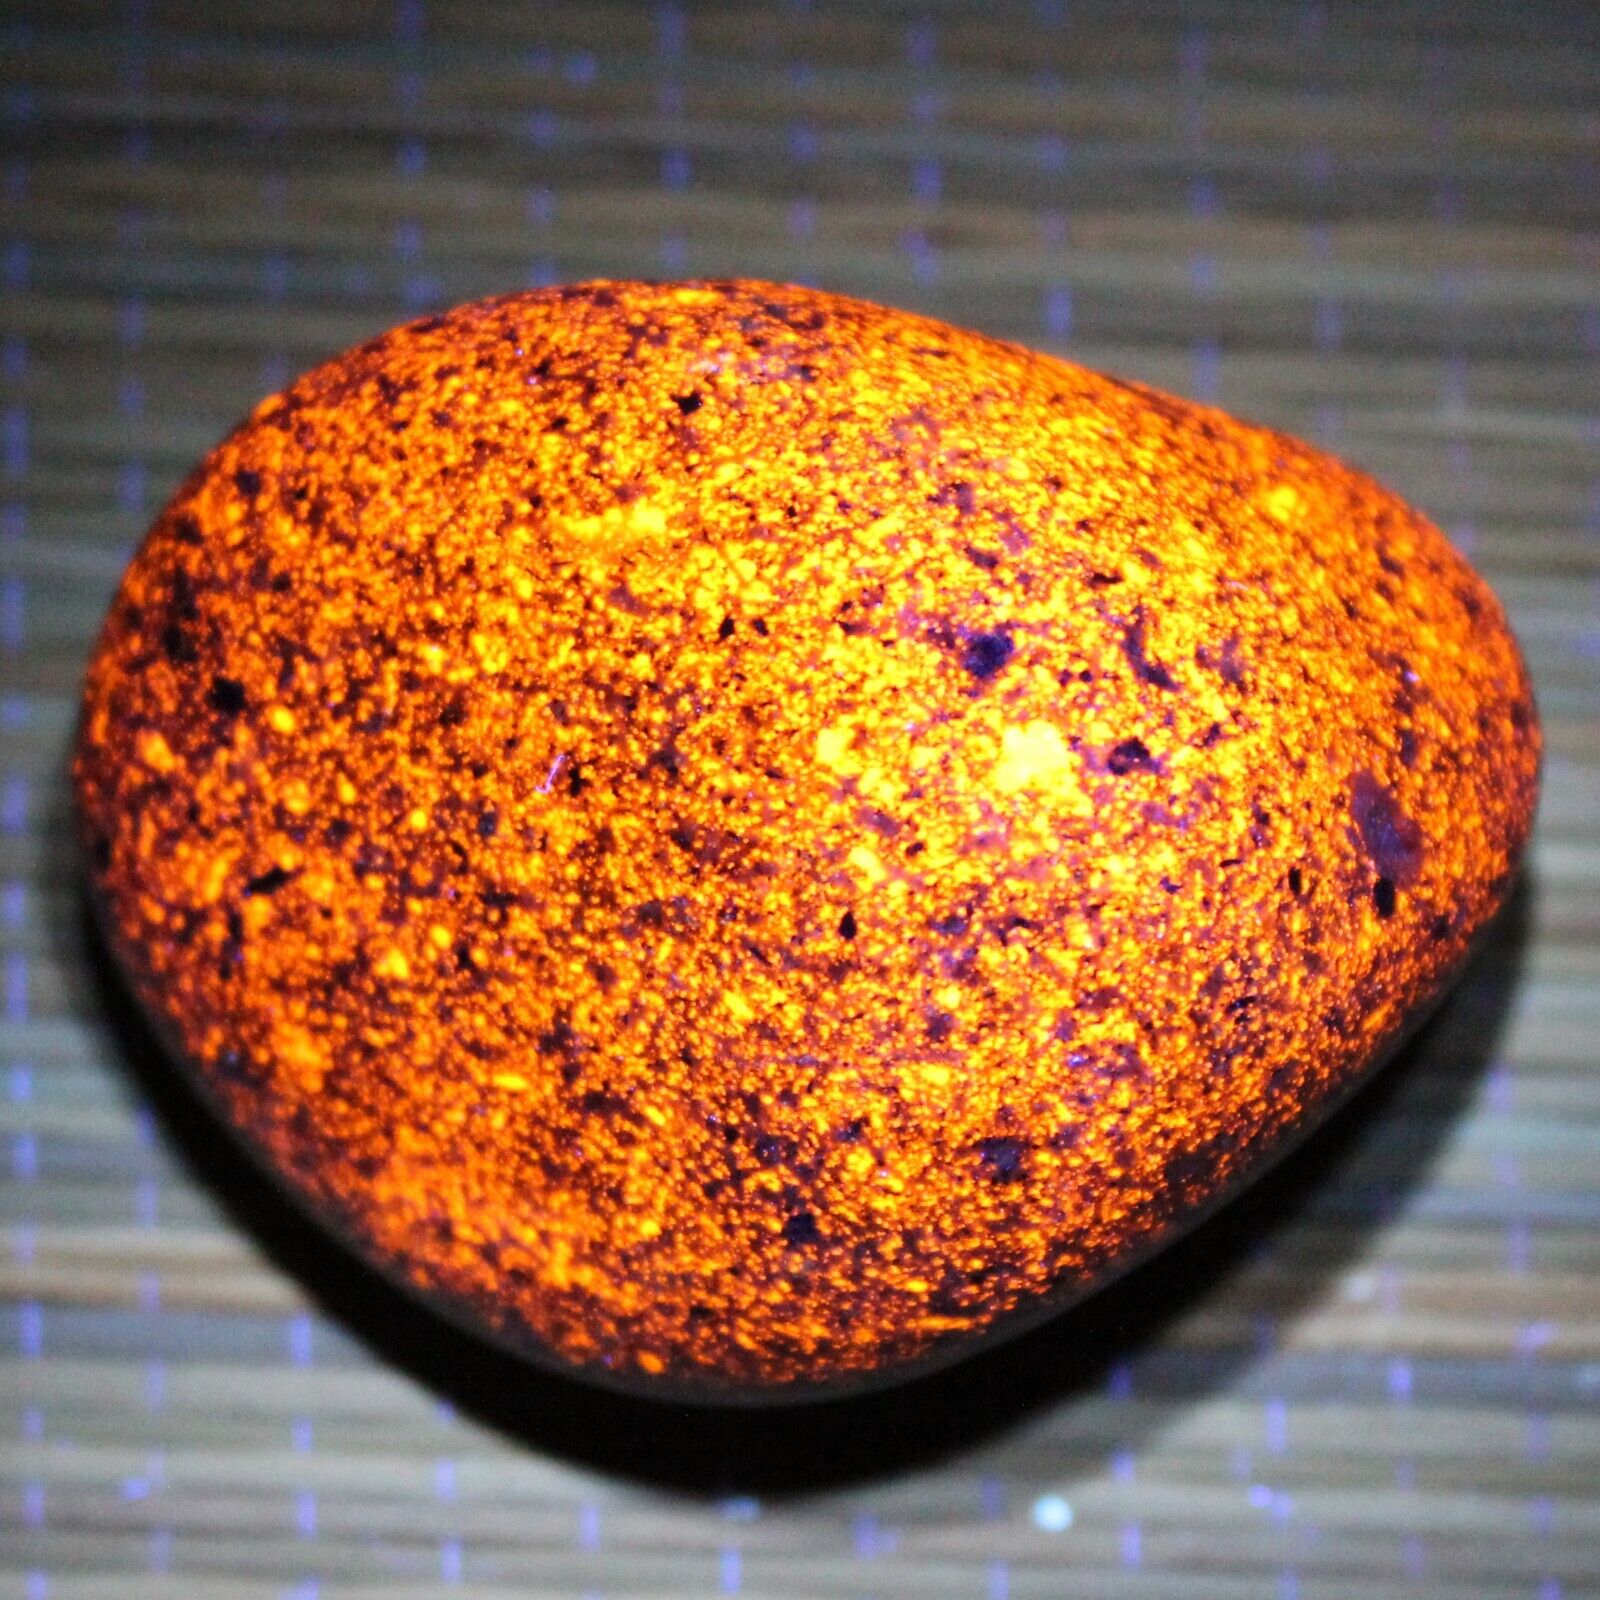 BIG BRIGHT Yooperlite Rock from Lake Superior Fluorescent Sodalite Glow Stone Z5